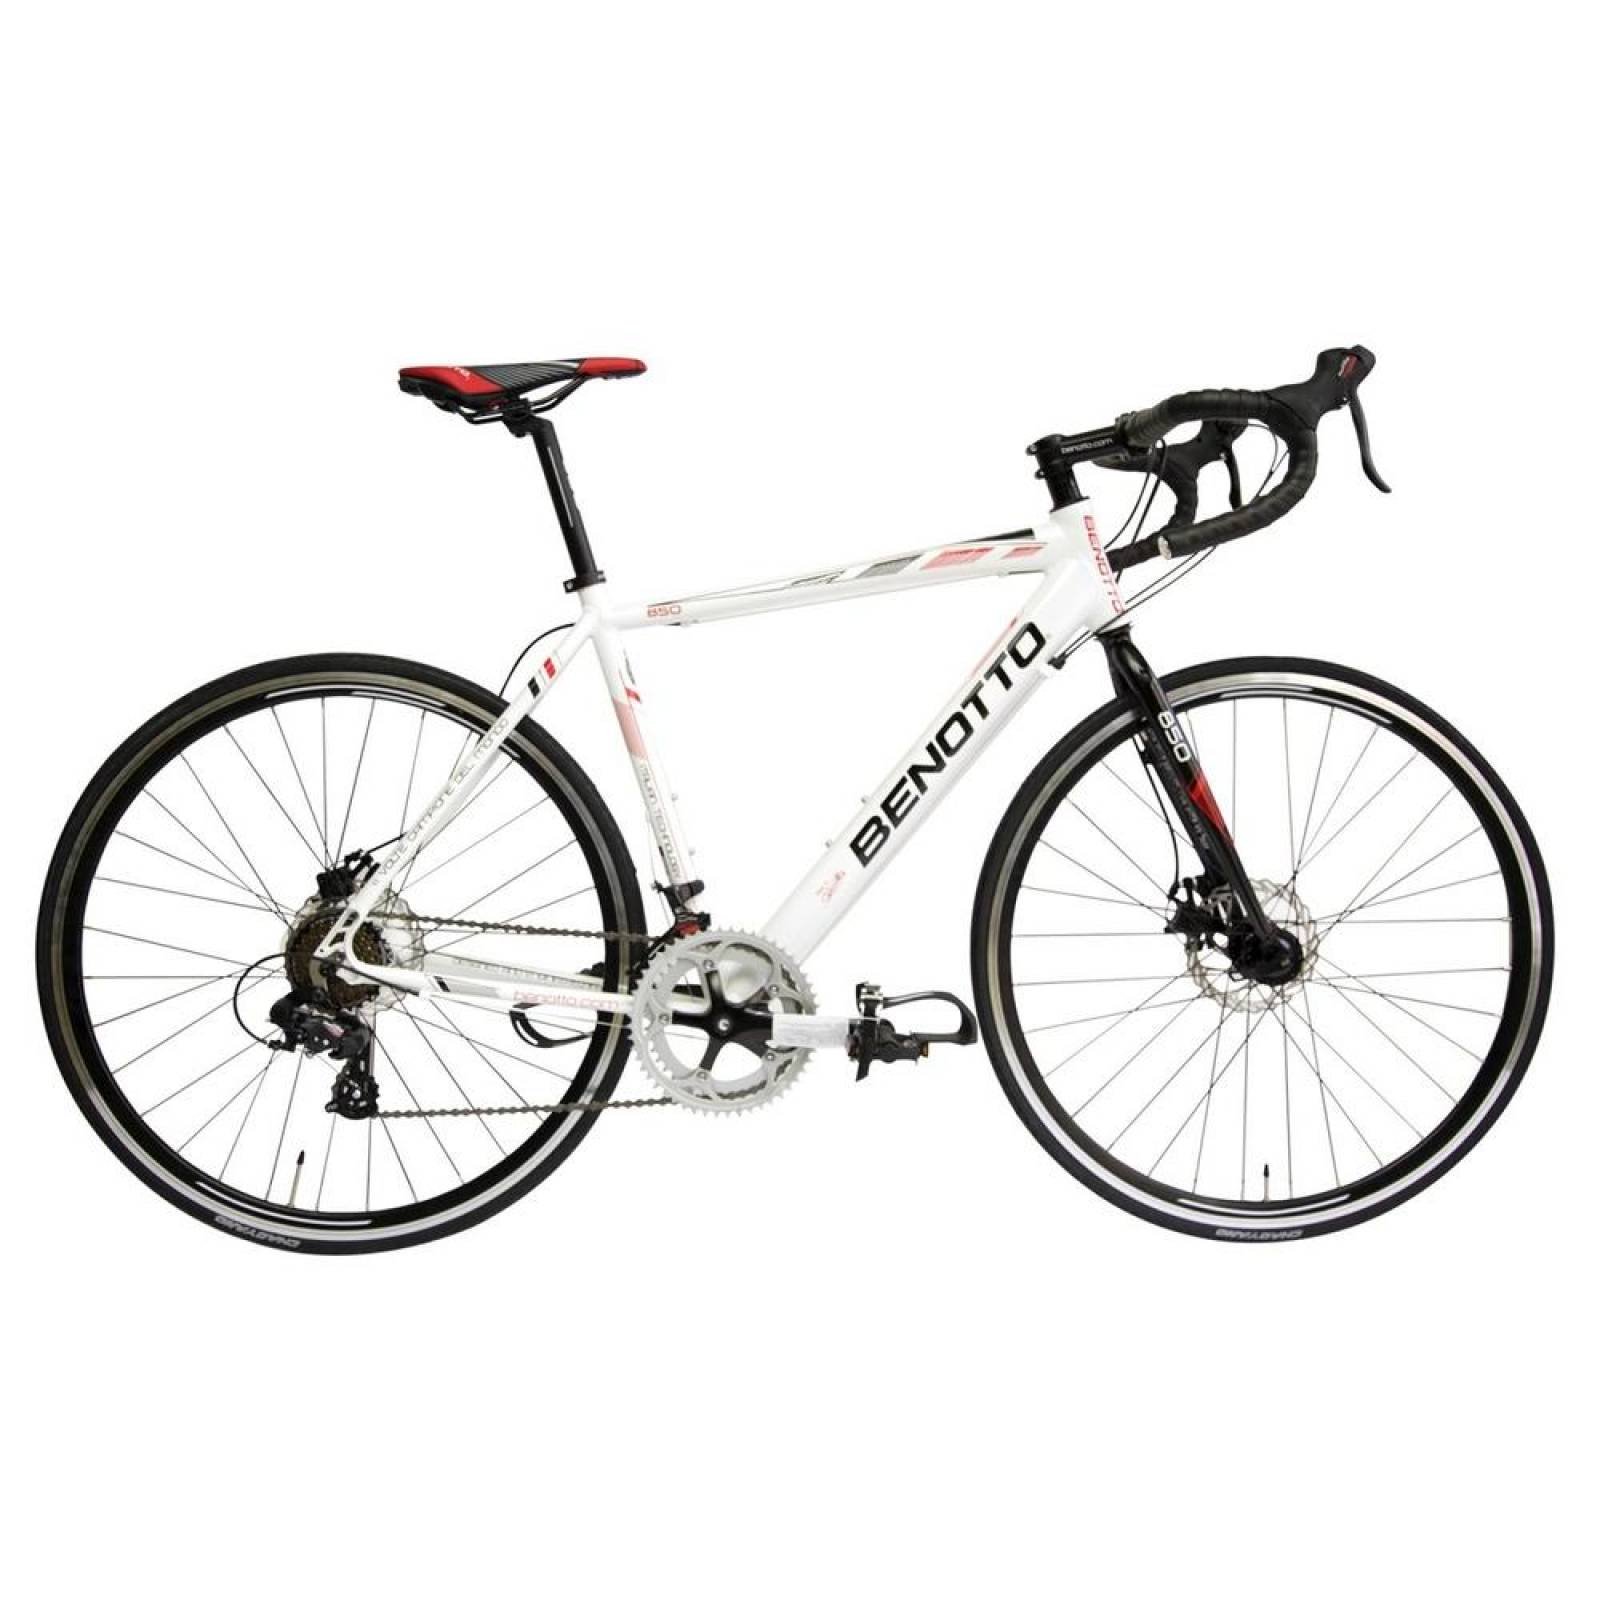 Bicicleta Benotto Ruta 850 Aluminio R700c 14v Shimano Blanca 